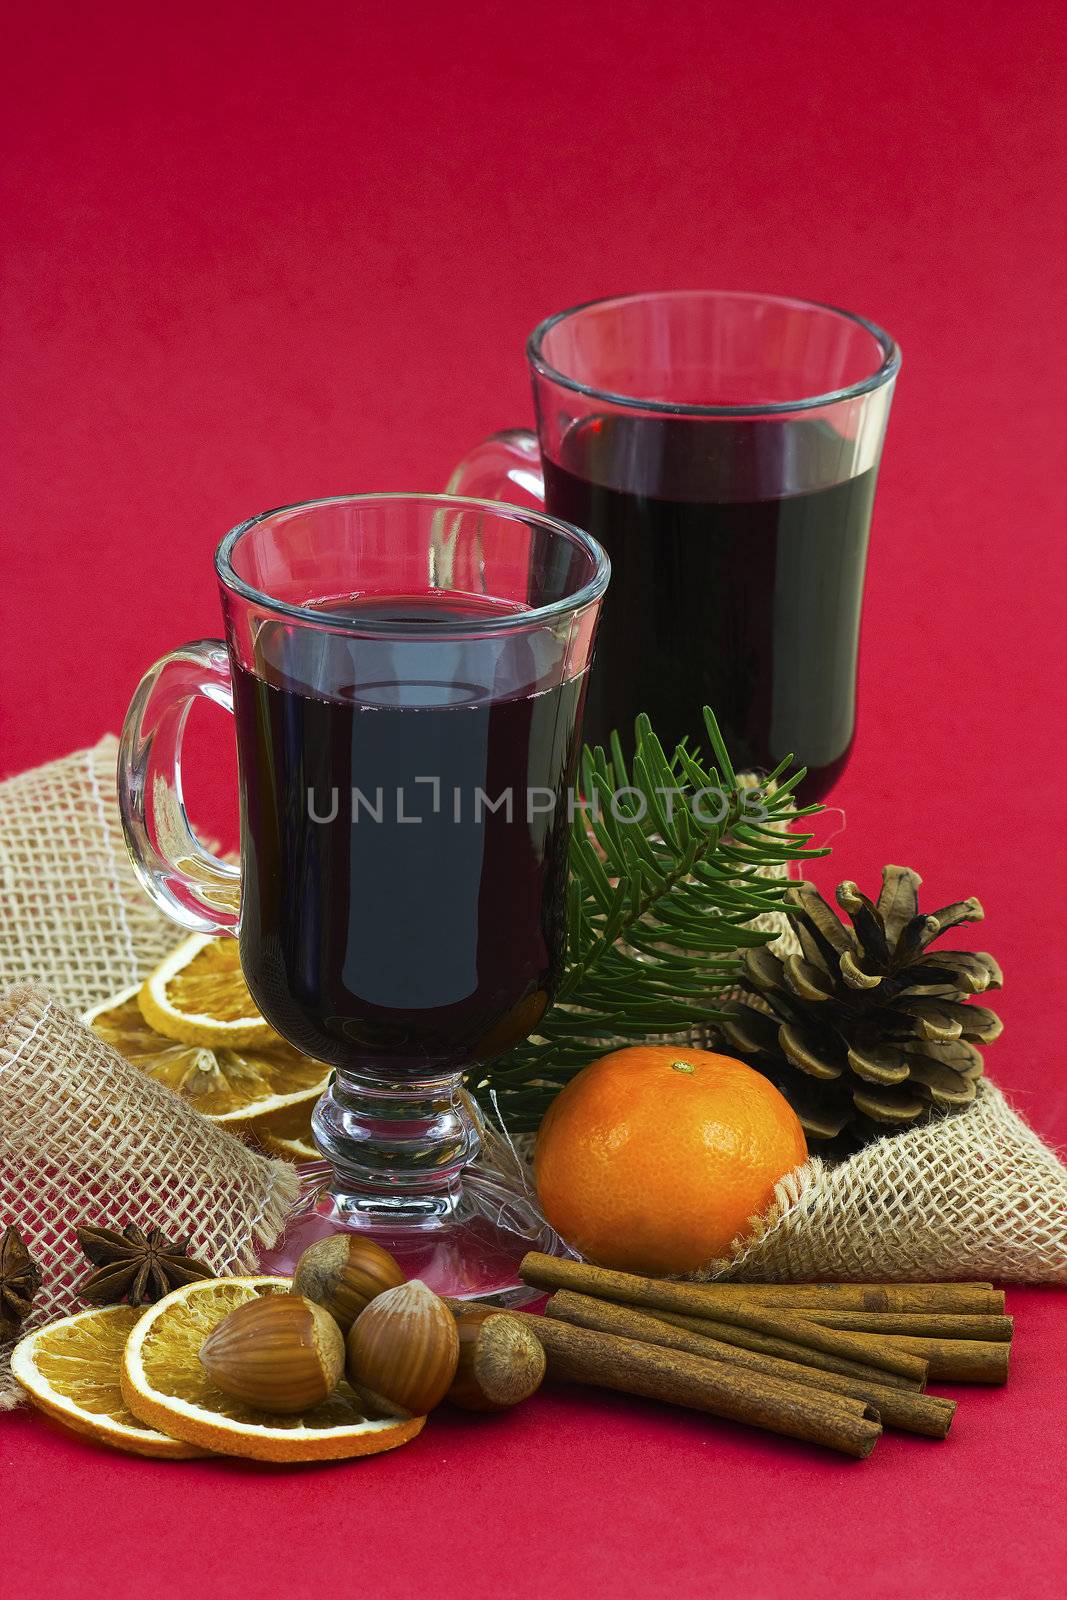 hot wine and christmas decoration by miradrozdowski